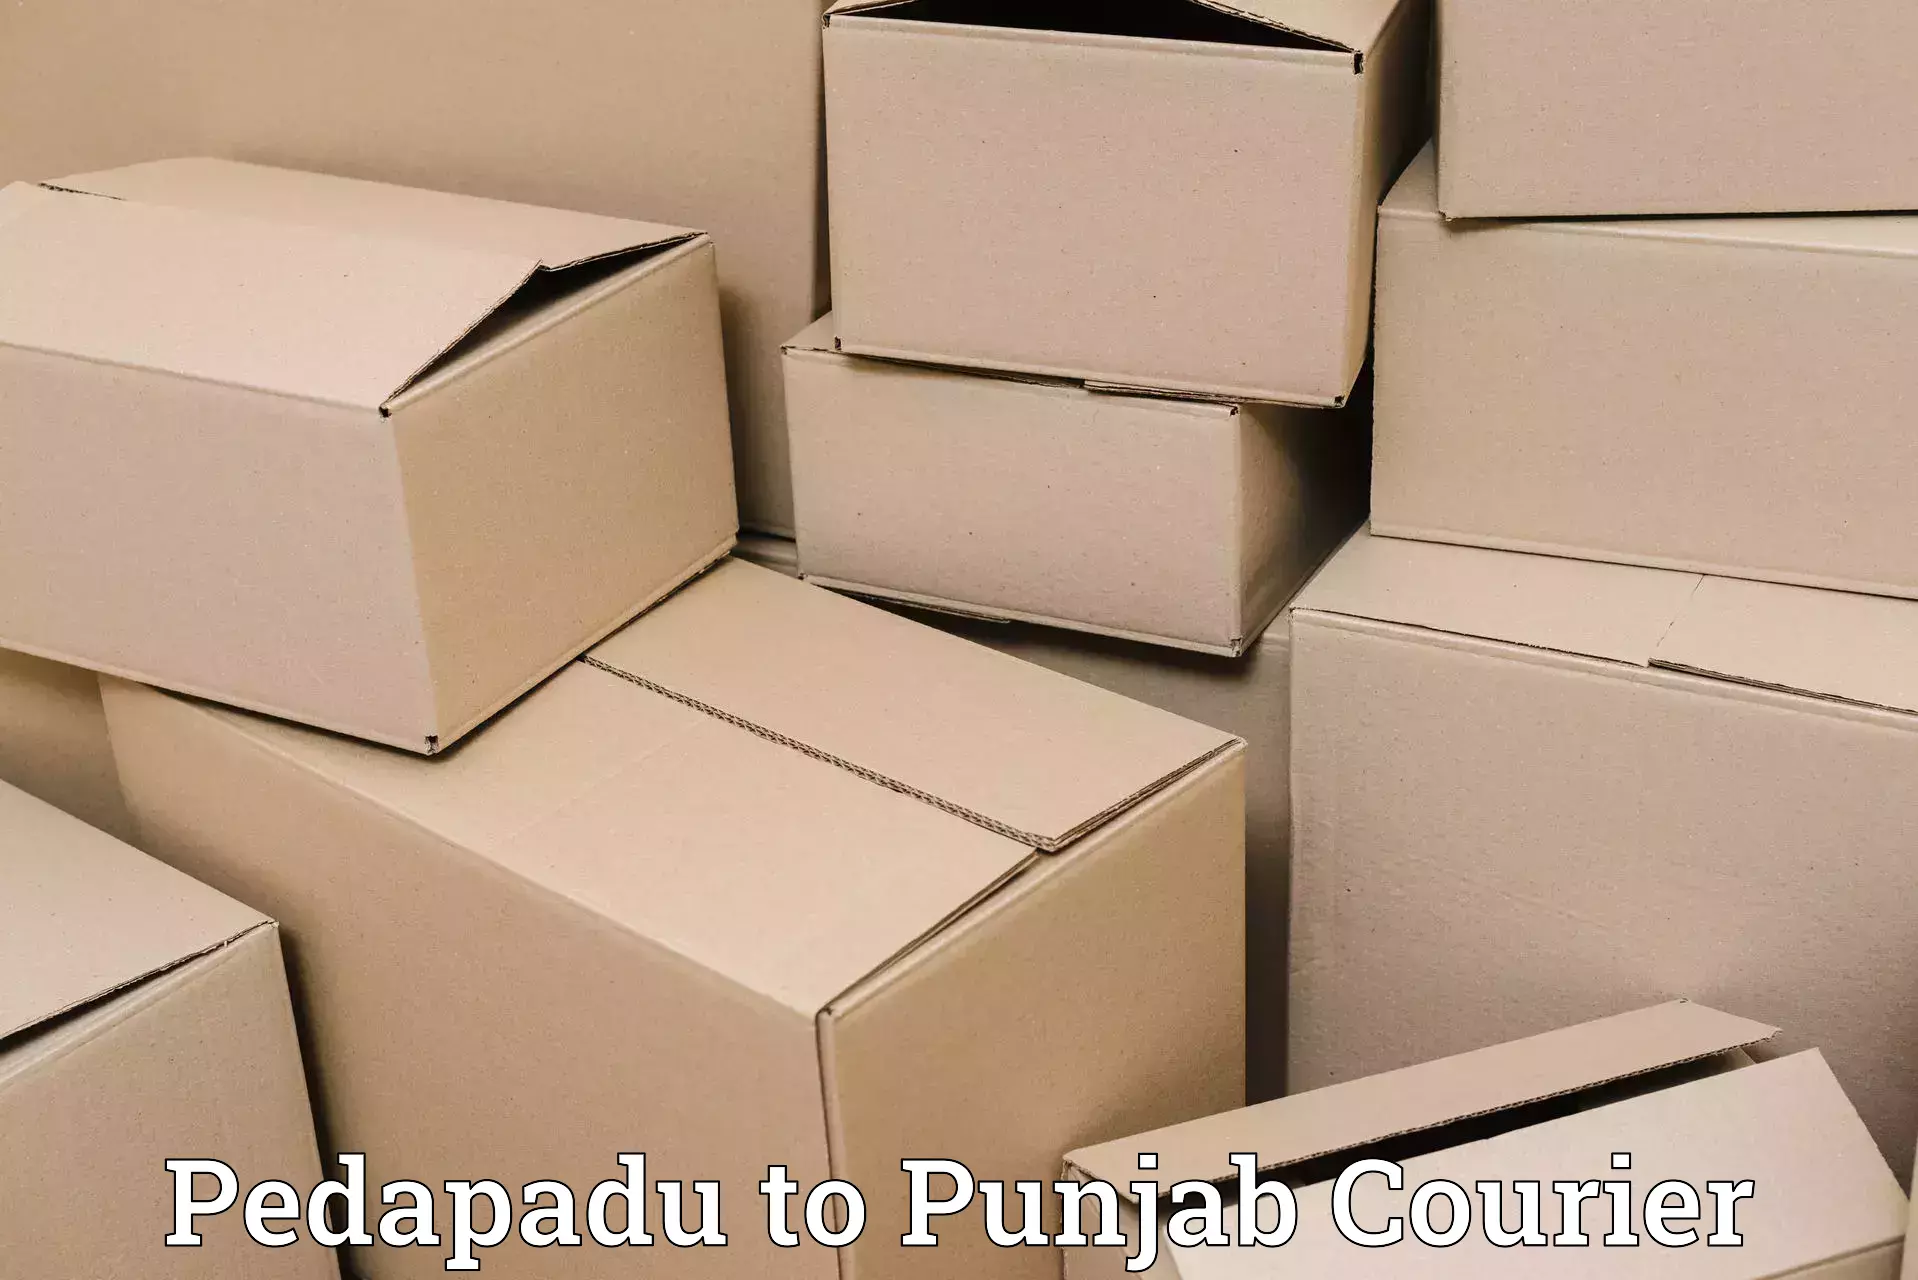 International logistics Pedapadu to Punjab